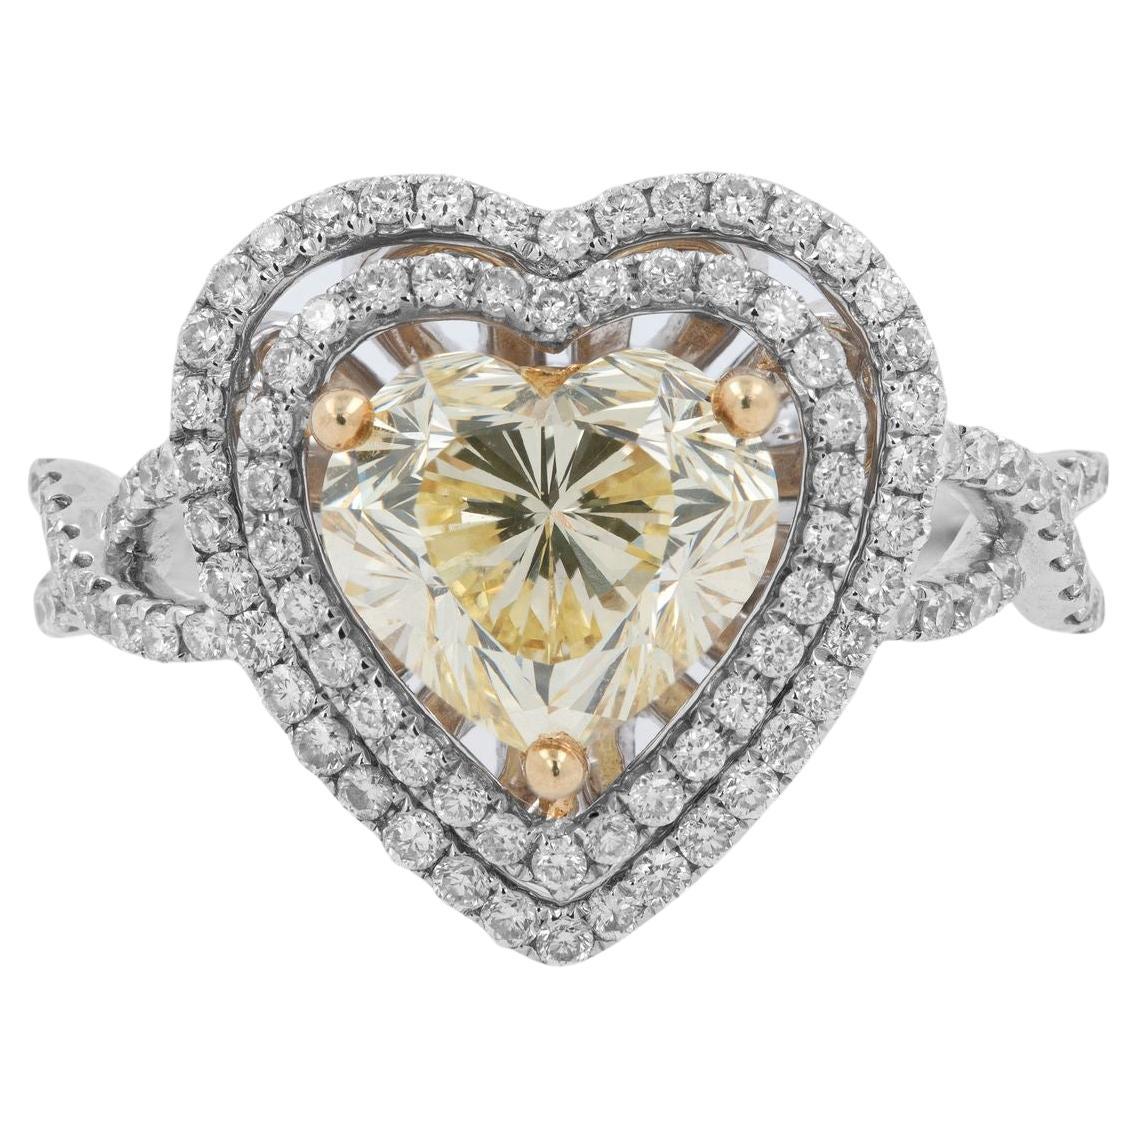  GIA-certified 2.15 Carat Heart-Shaped Diamond Ring